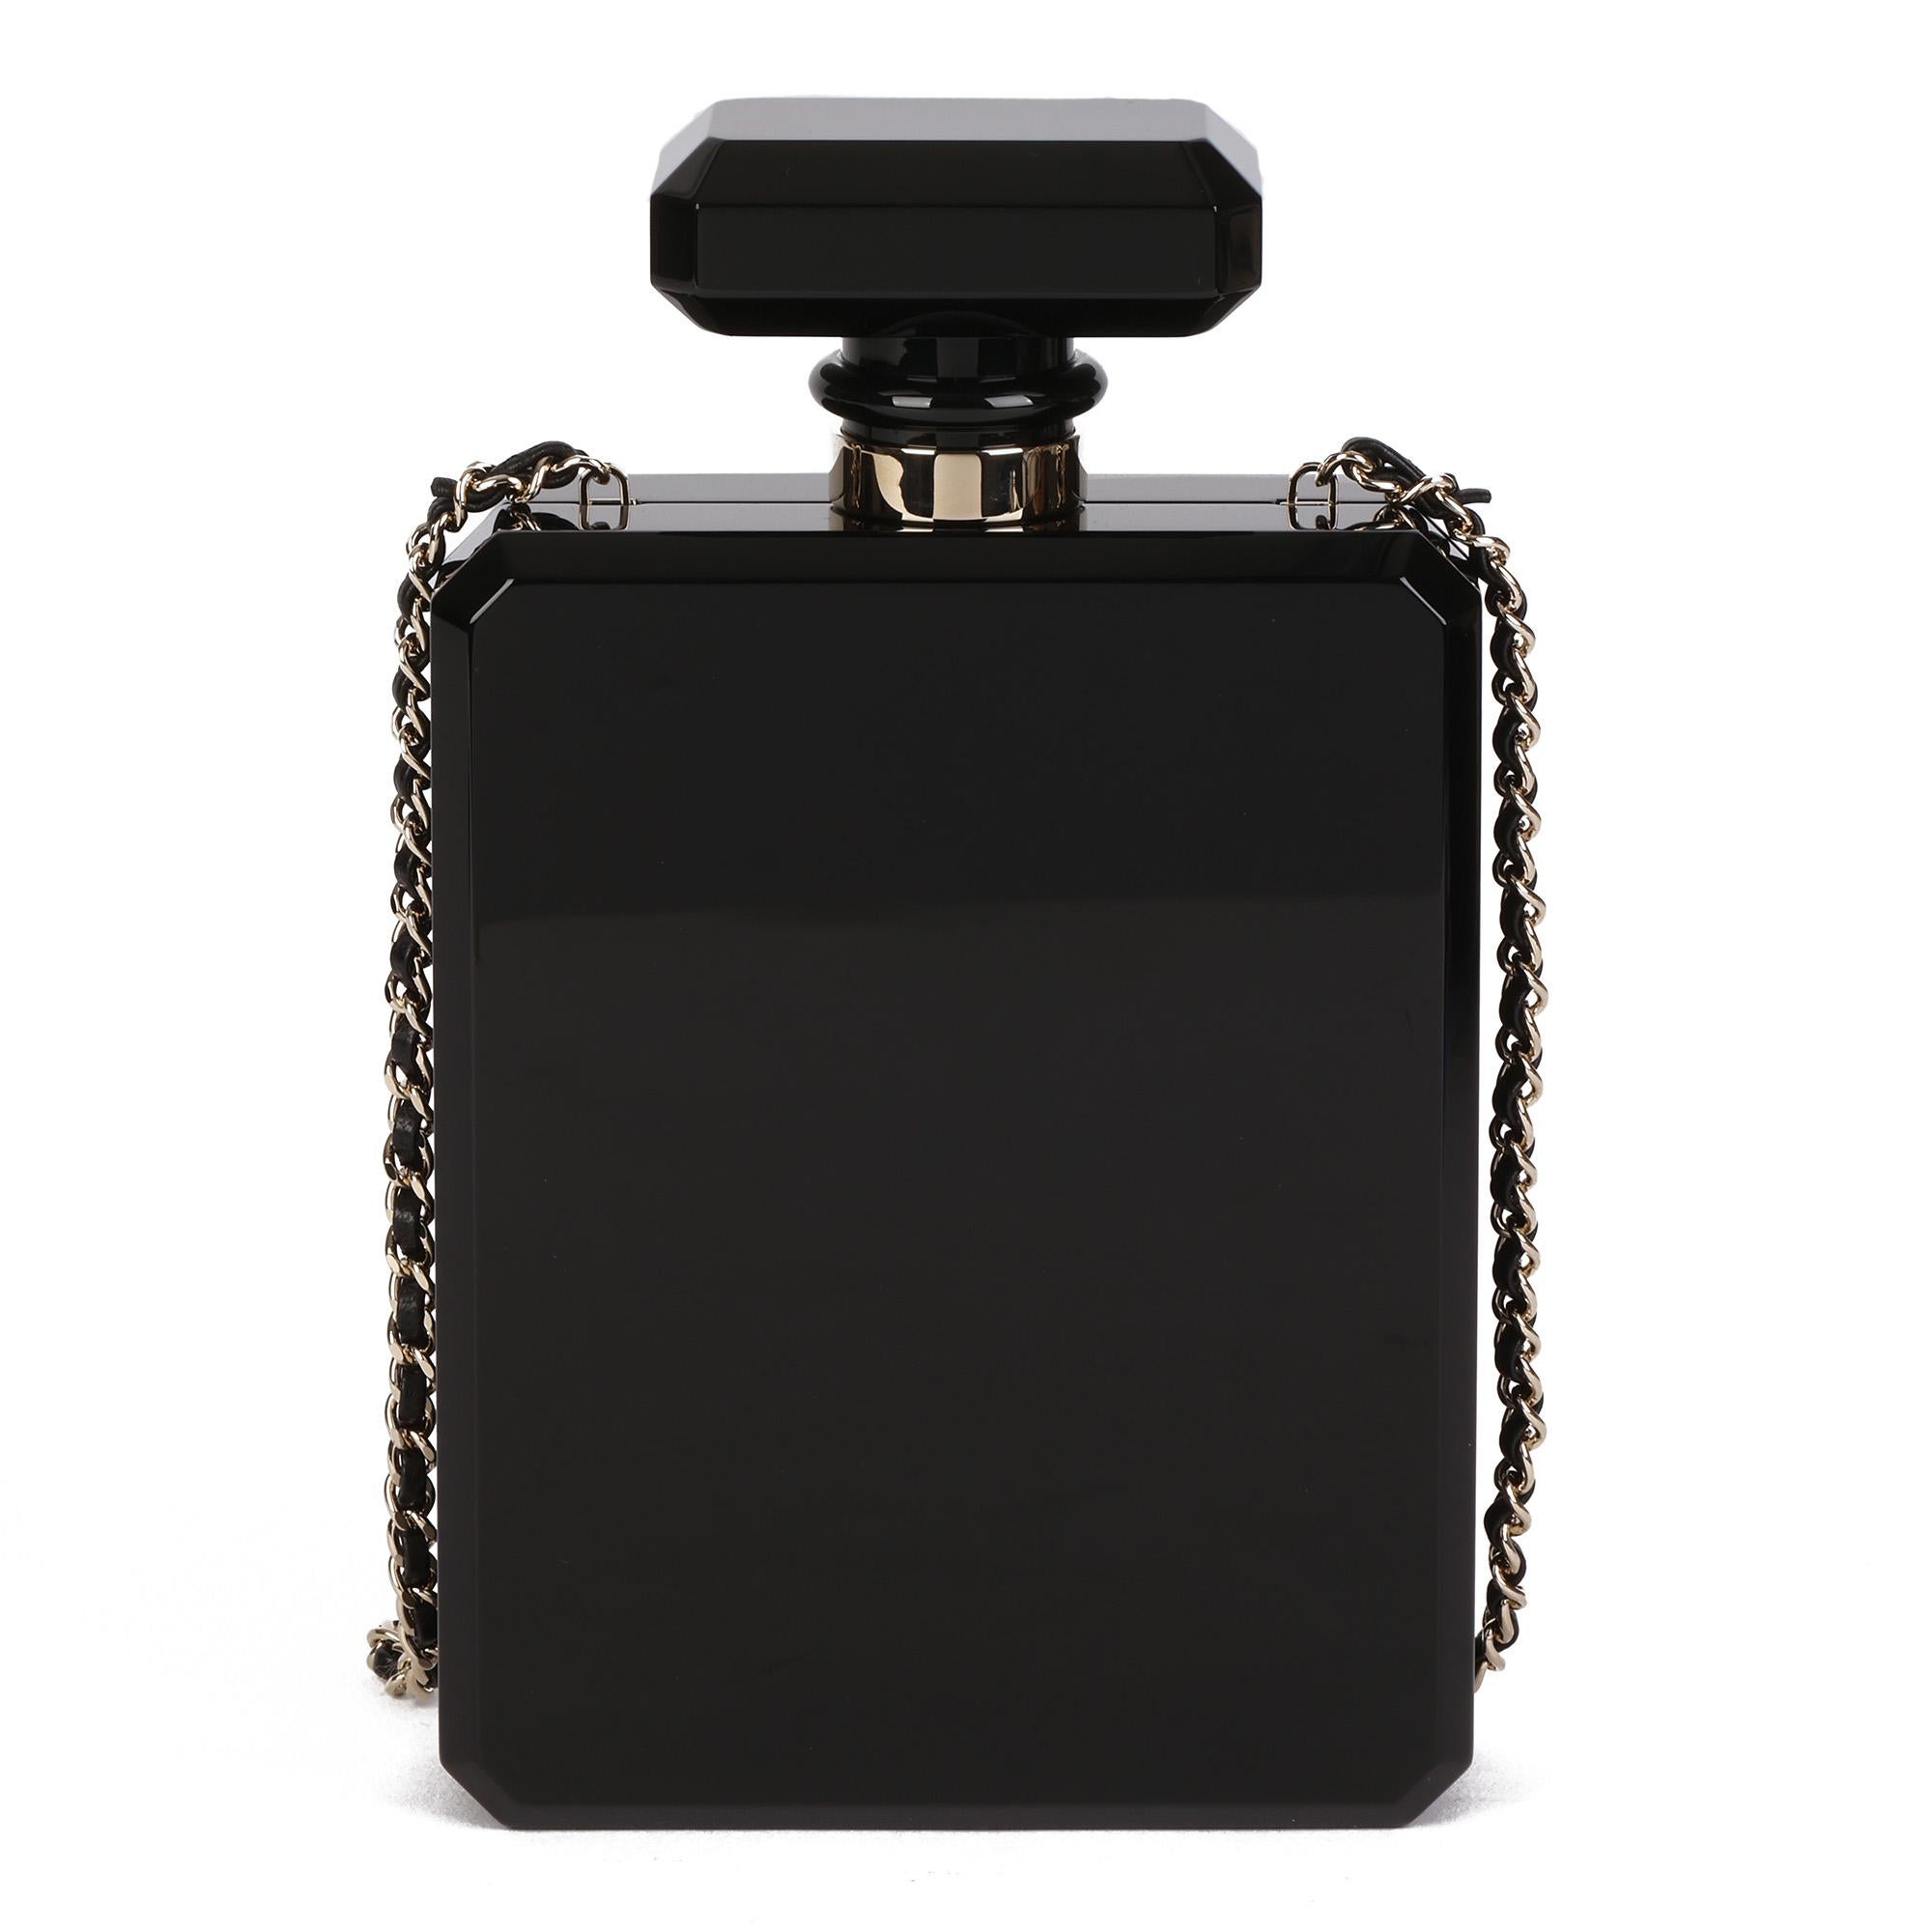 Authentic Chanel Plexiglass No. 5 Perfume Bottle Bag | eBay